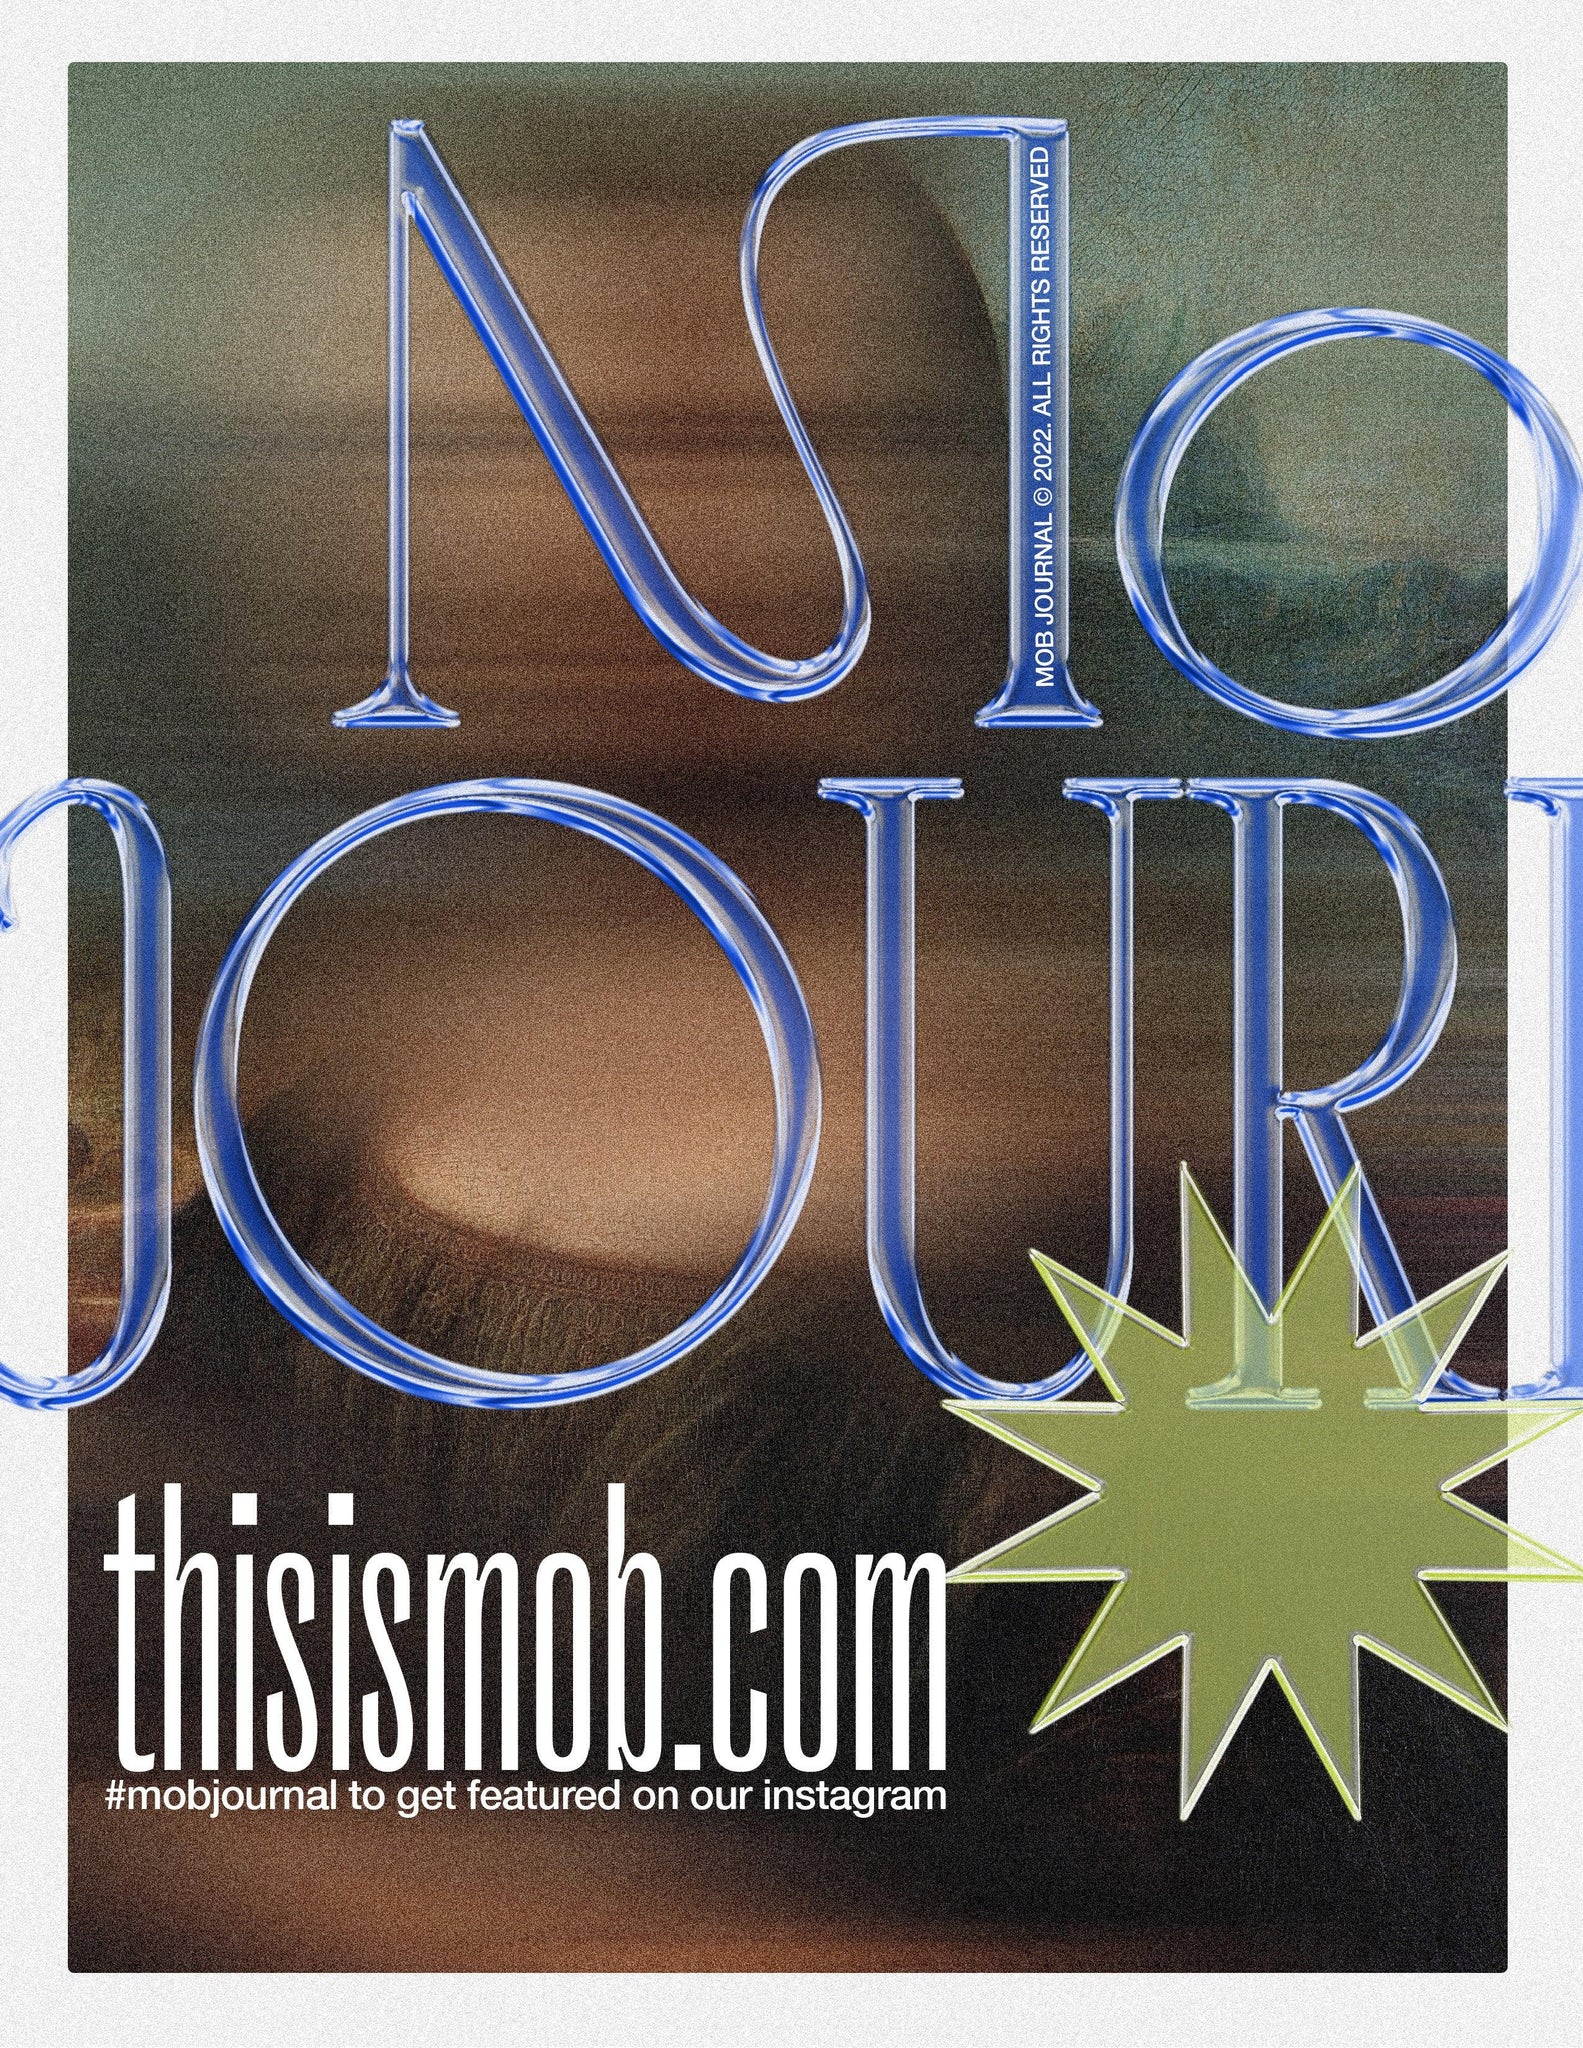 MOB JOURNAL | VOLUME TWENTY FIVE | ISSUE #58 - Mob Journal